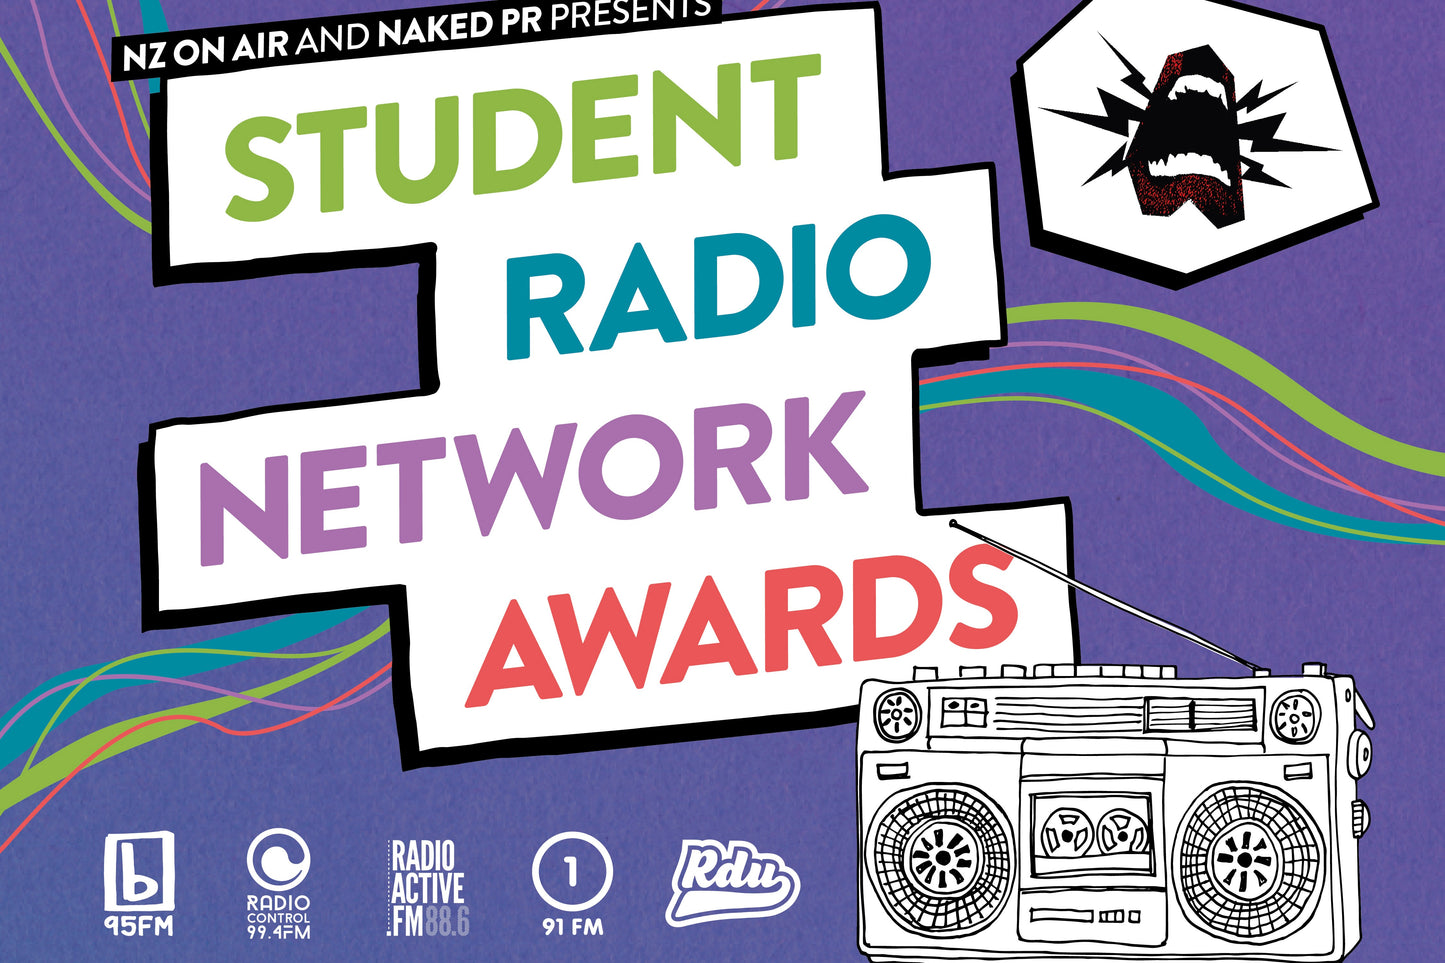 STUDENT RADIO NETWORK AWARDS WINNERS FOR 2022 REVEALED